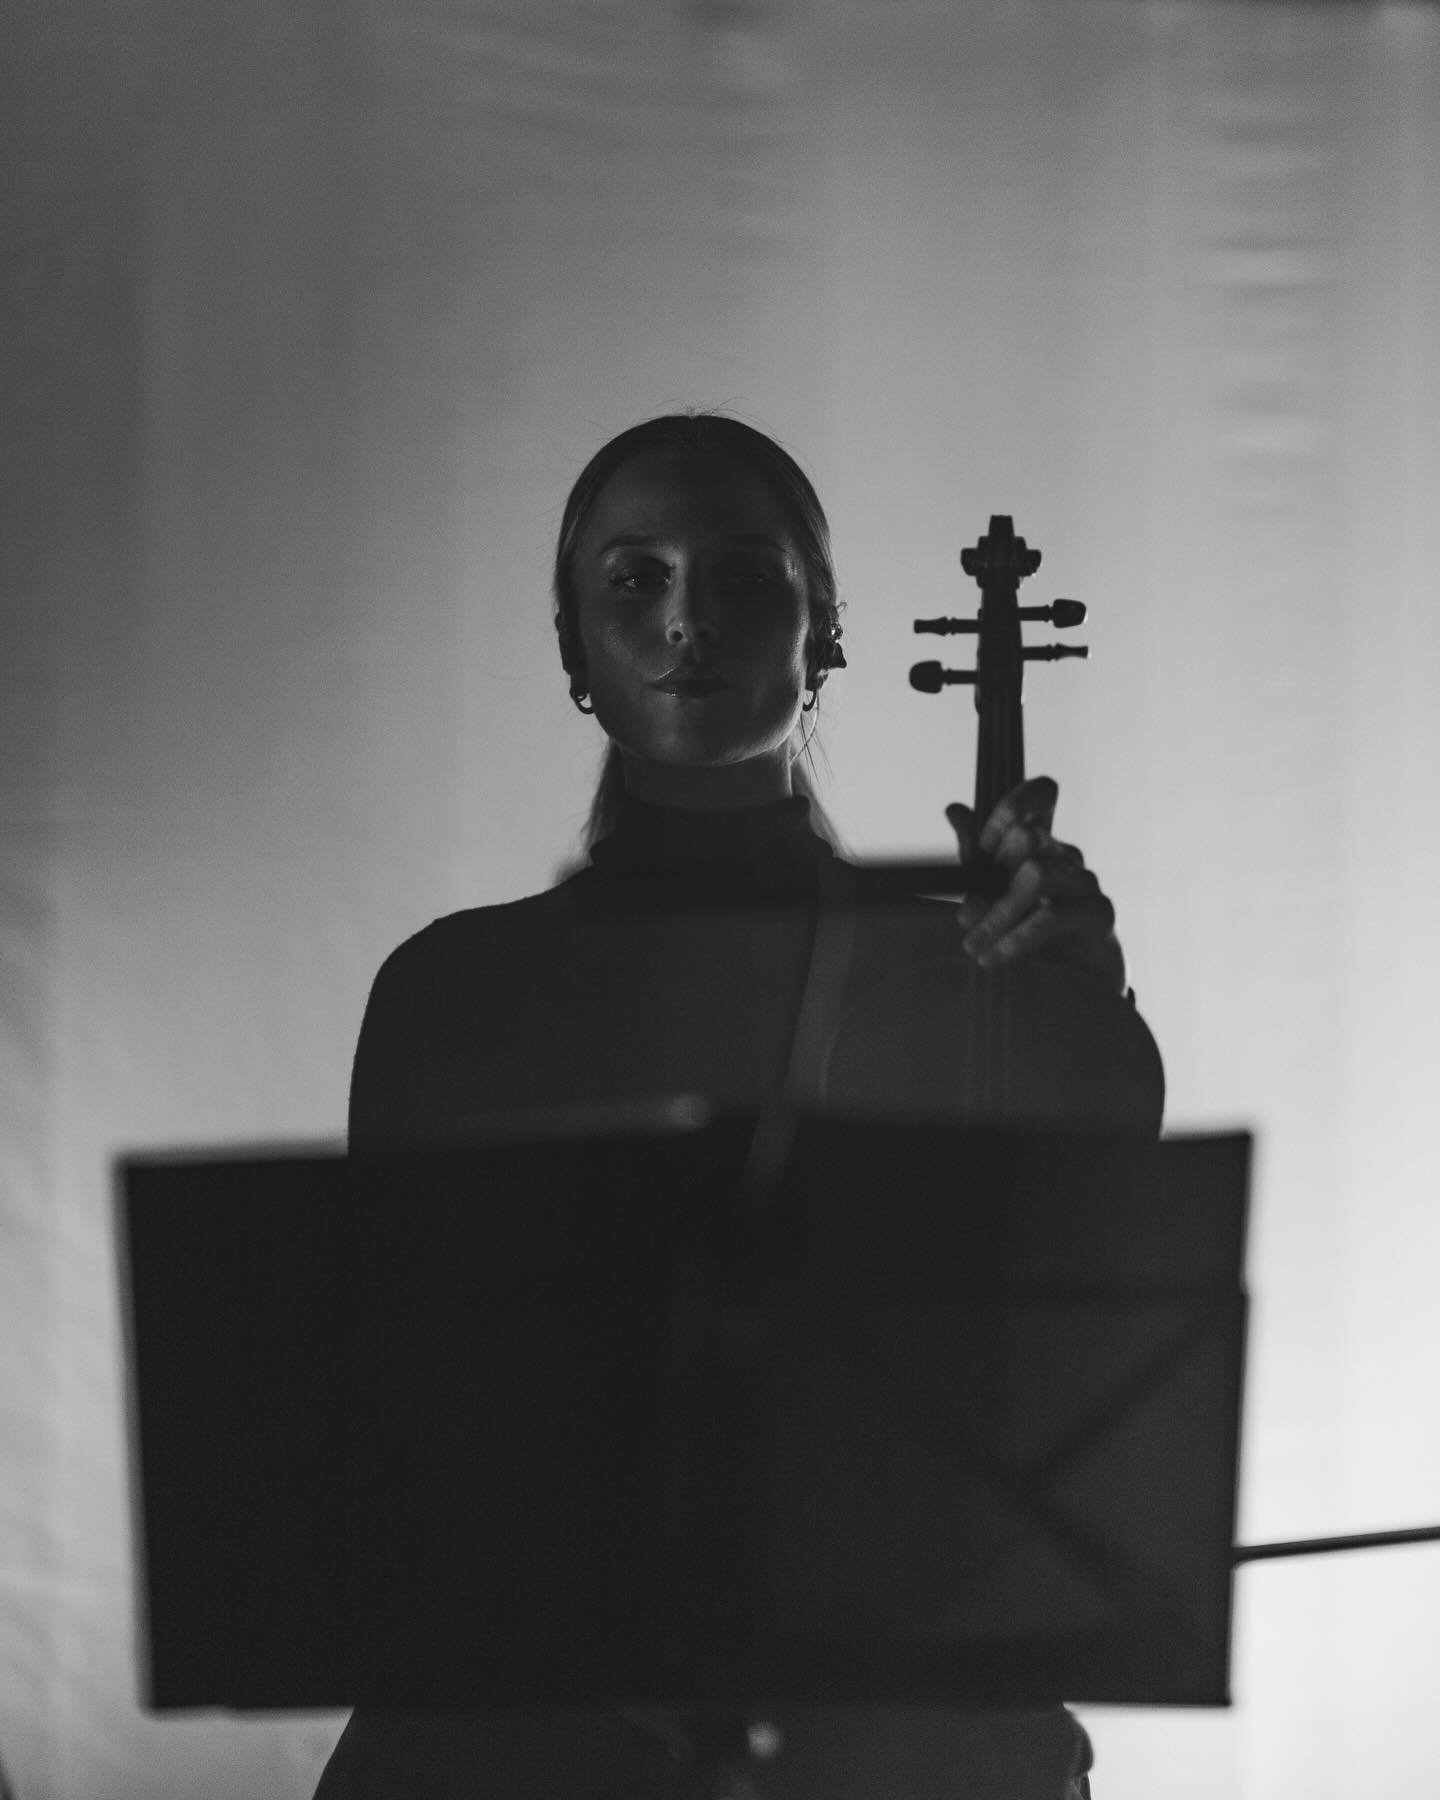 Black &amp; white from tour 📸 @ryanplomp 

#montellfish #blackandwhitephotography #amsterdam #paradiso #montellfishmusic #violinist #violist #cellist #londonstringplayers 
#montellfisheuropeantour